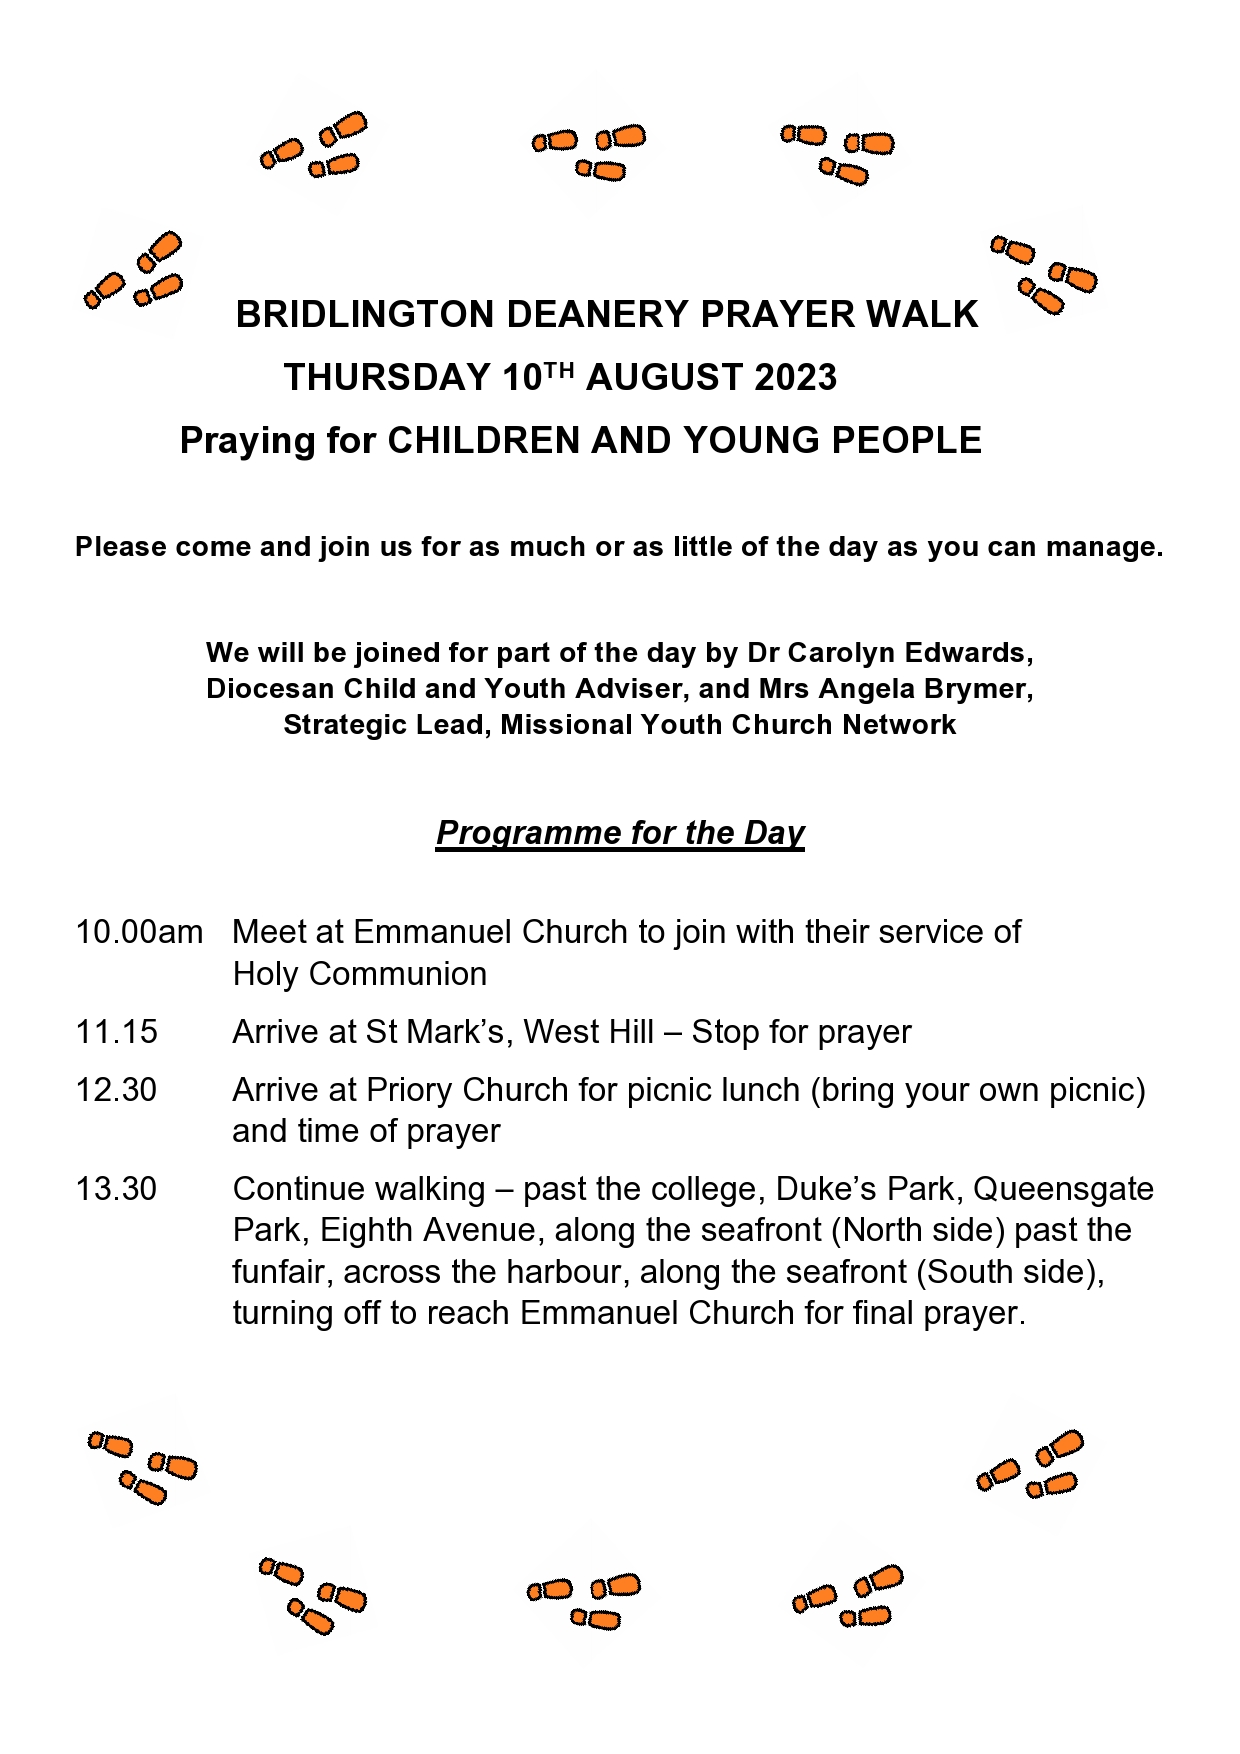 Deanery Prayer Walk